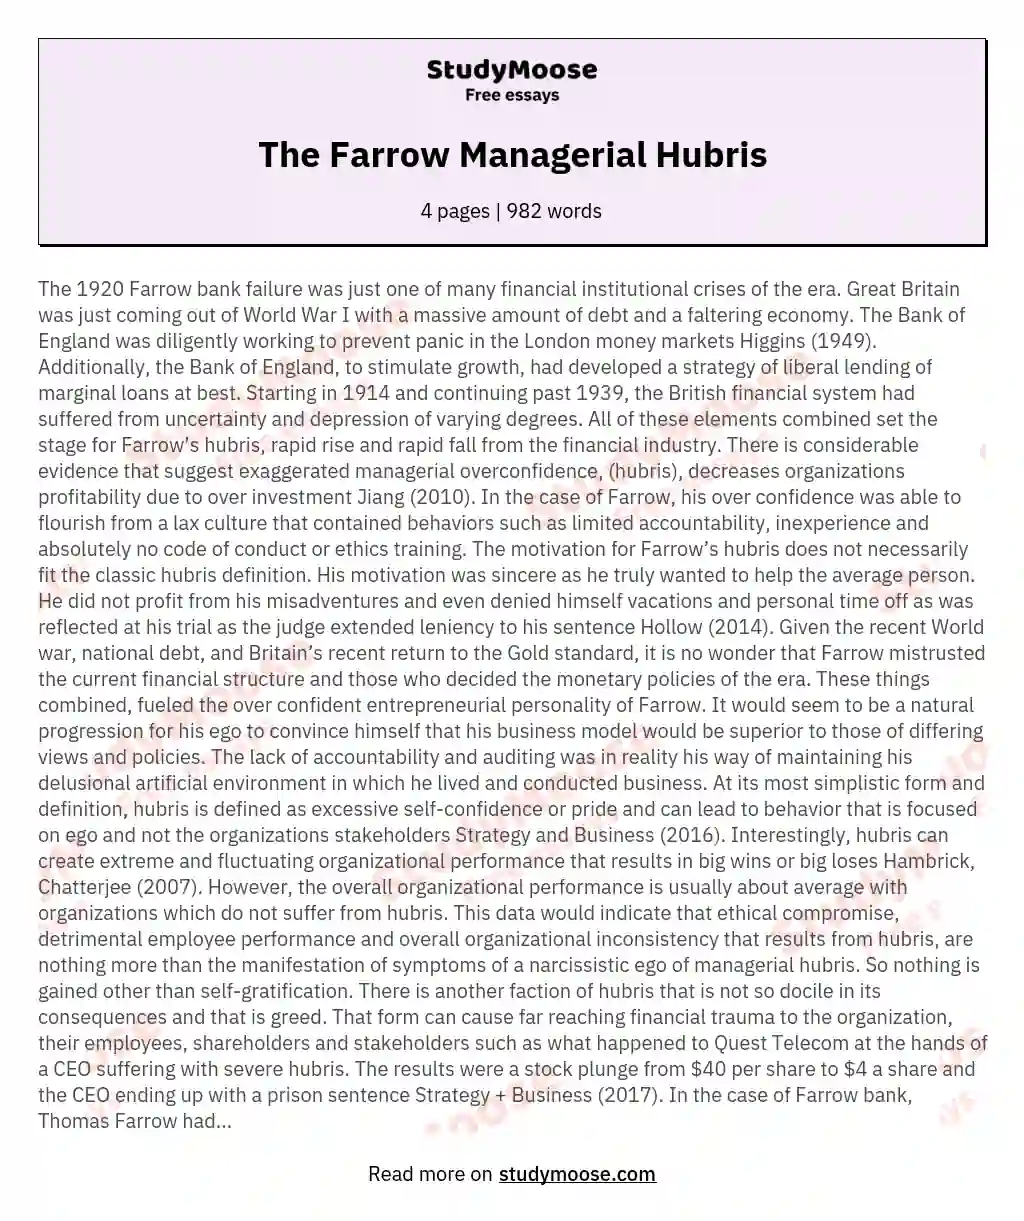 The Farrow Managerial Hubris essay